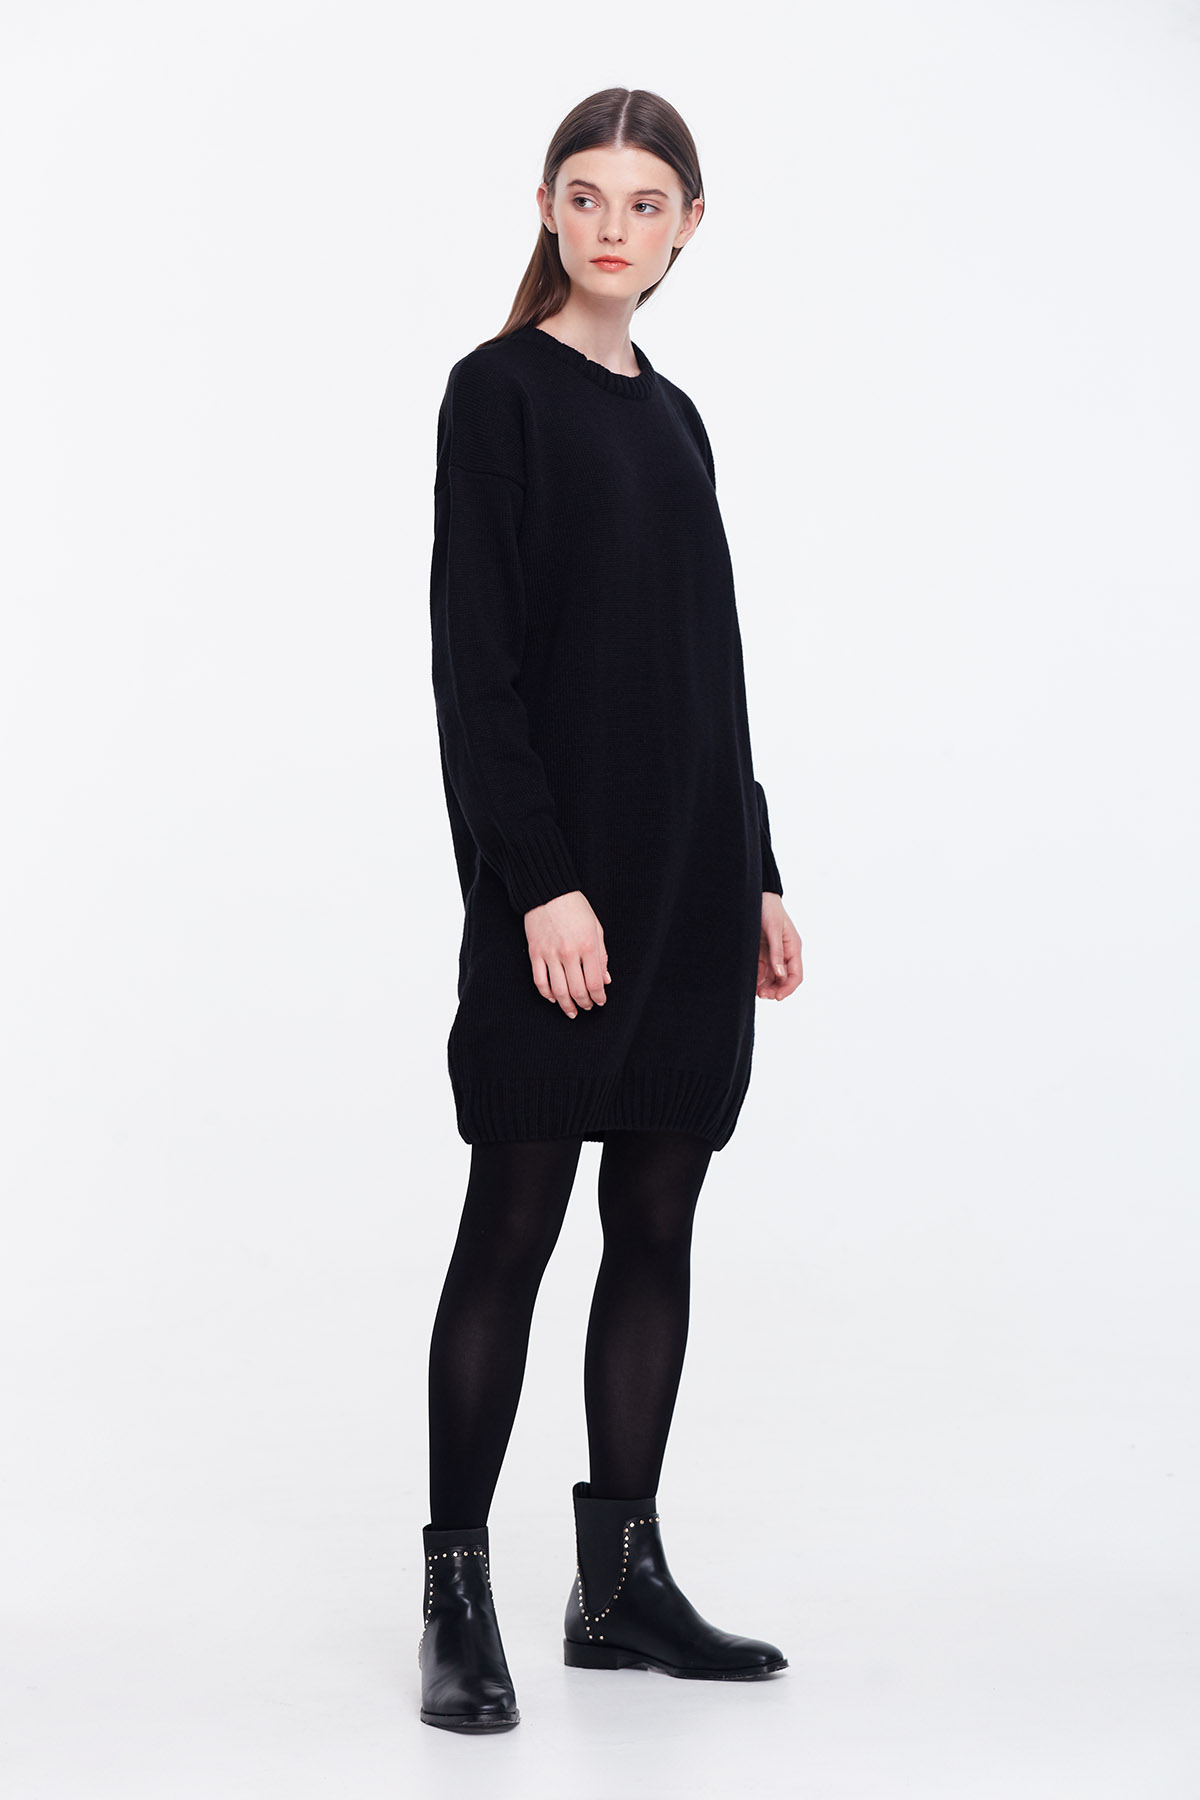 Loose-fitting black knit dress , photo 3